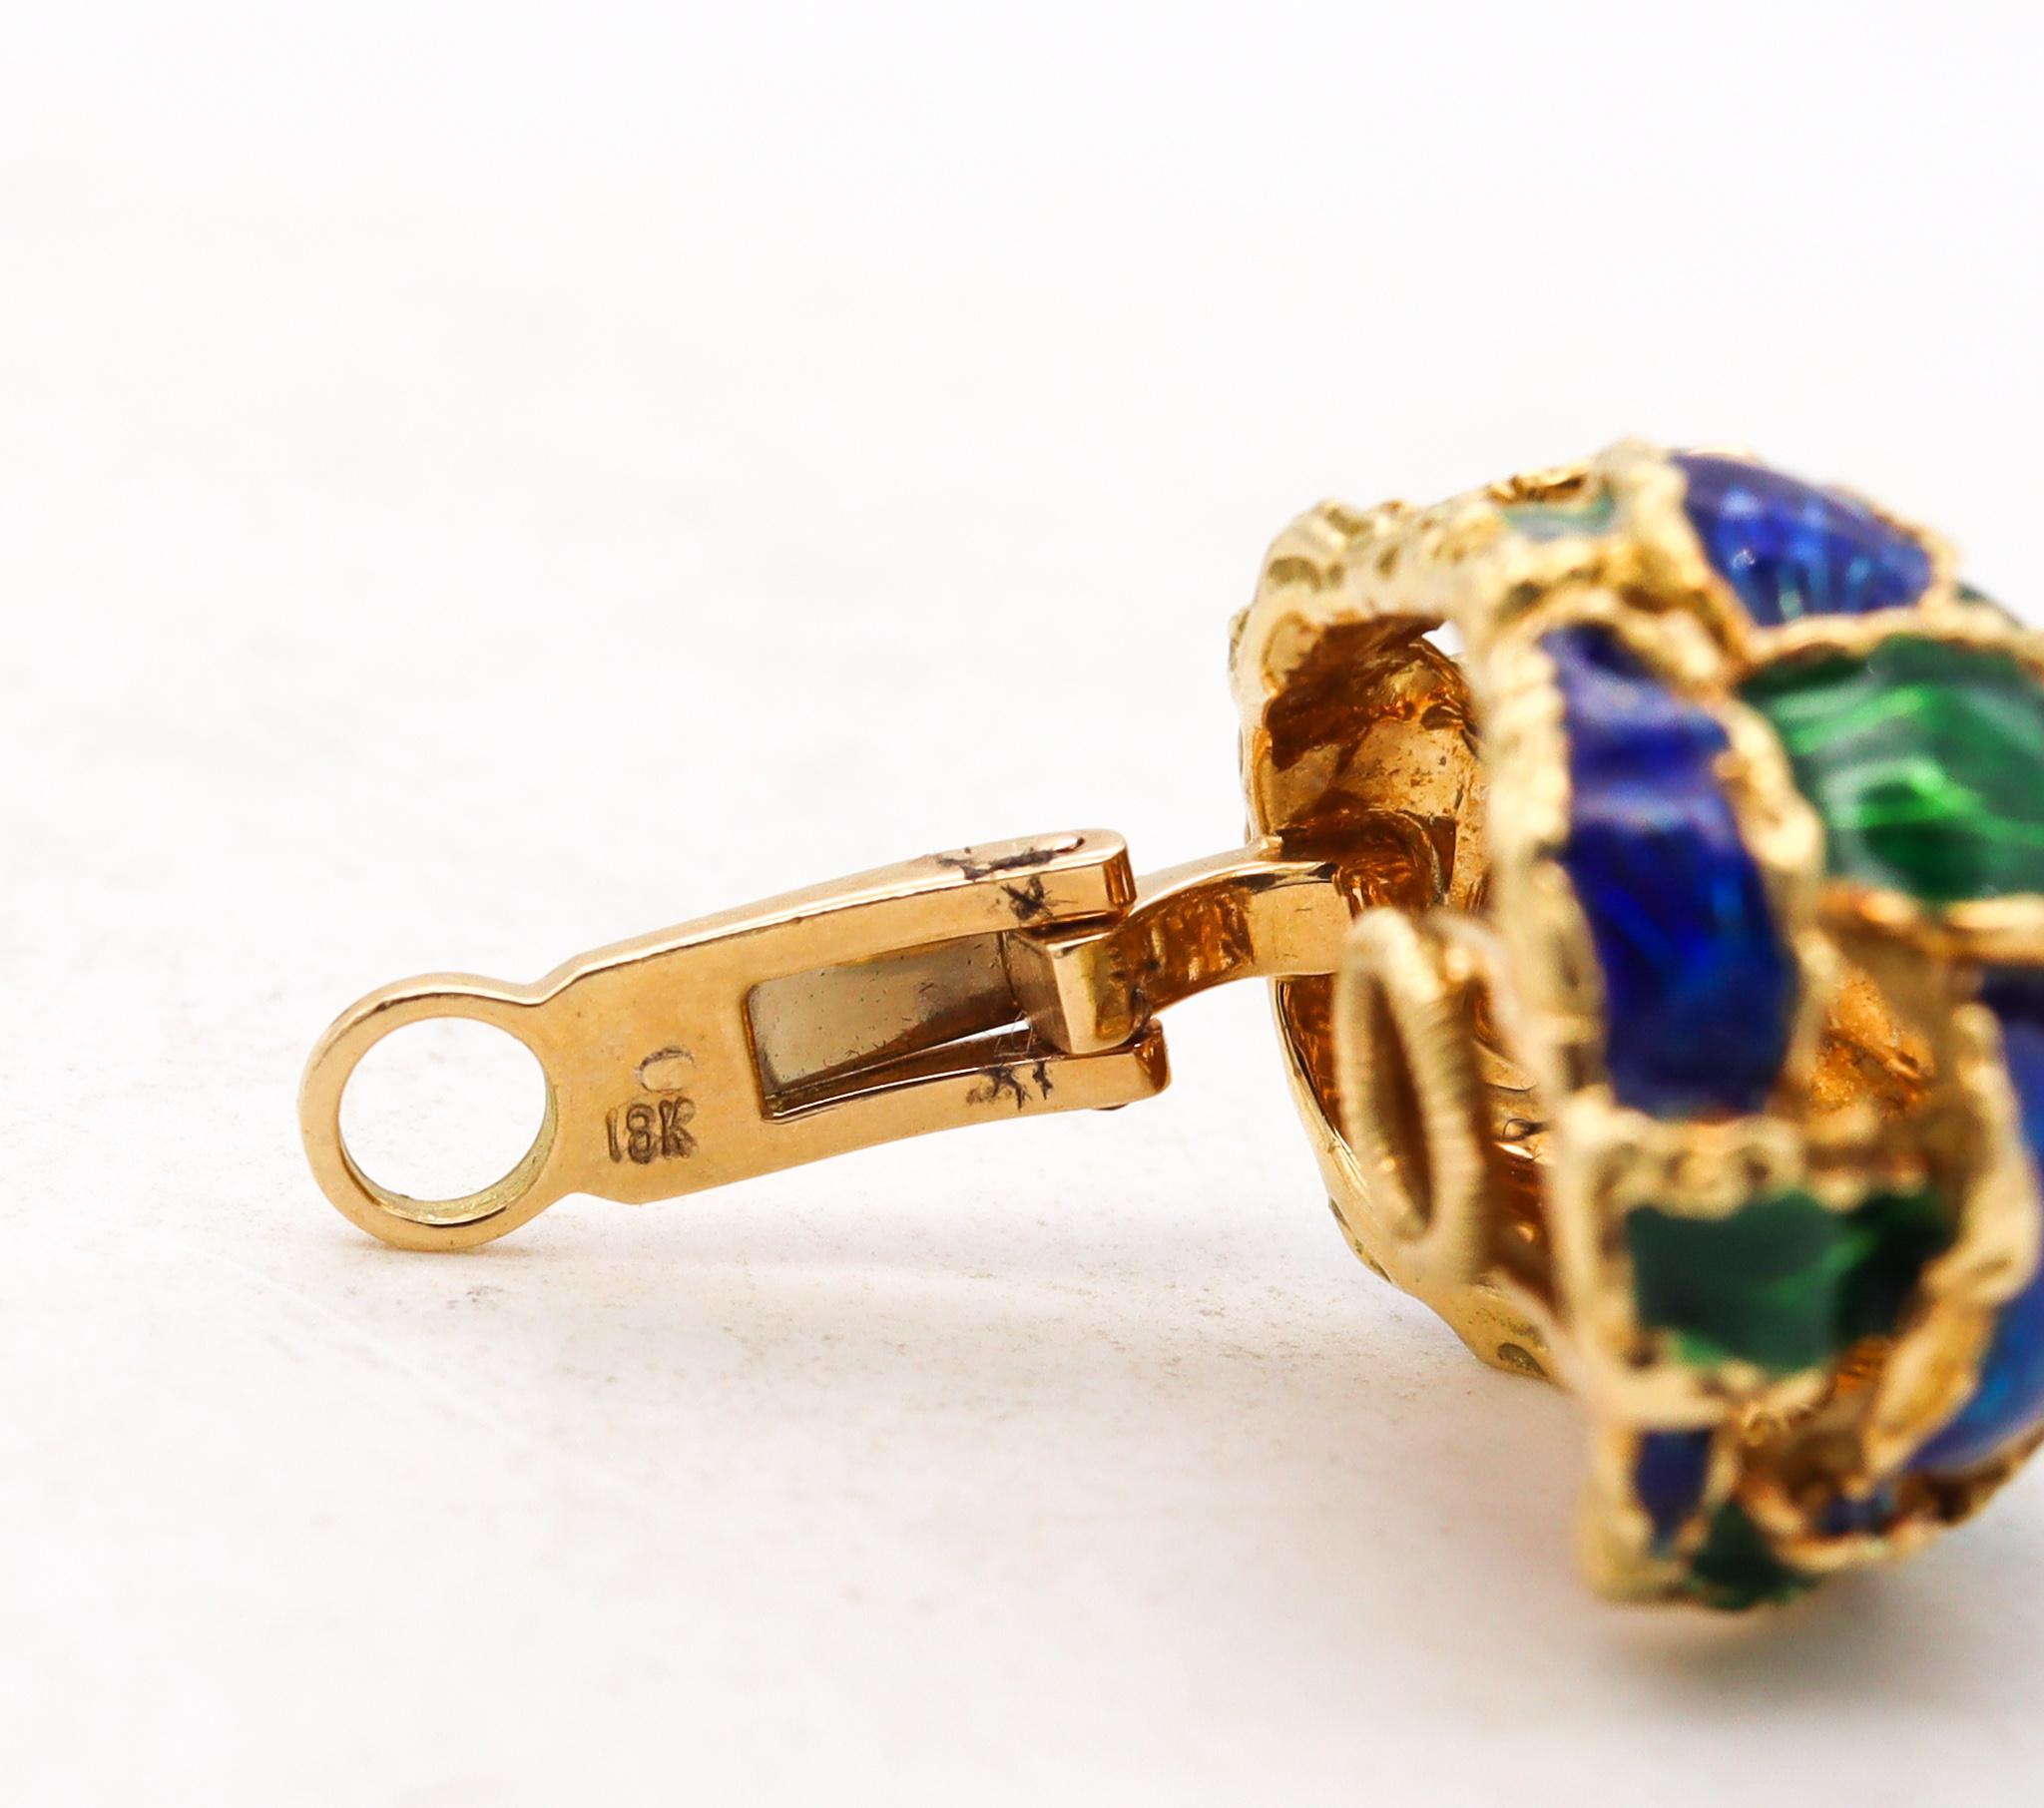 Modernist Modernism Italian 1970 Clips Earrings in Textured 18Kt Gold Blue Green Enamel